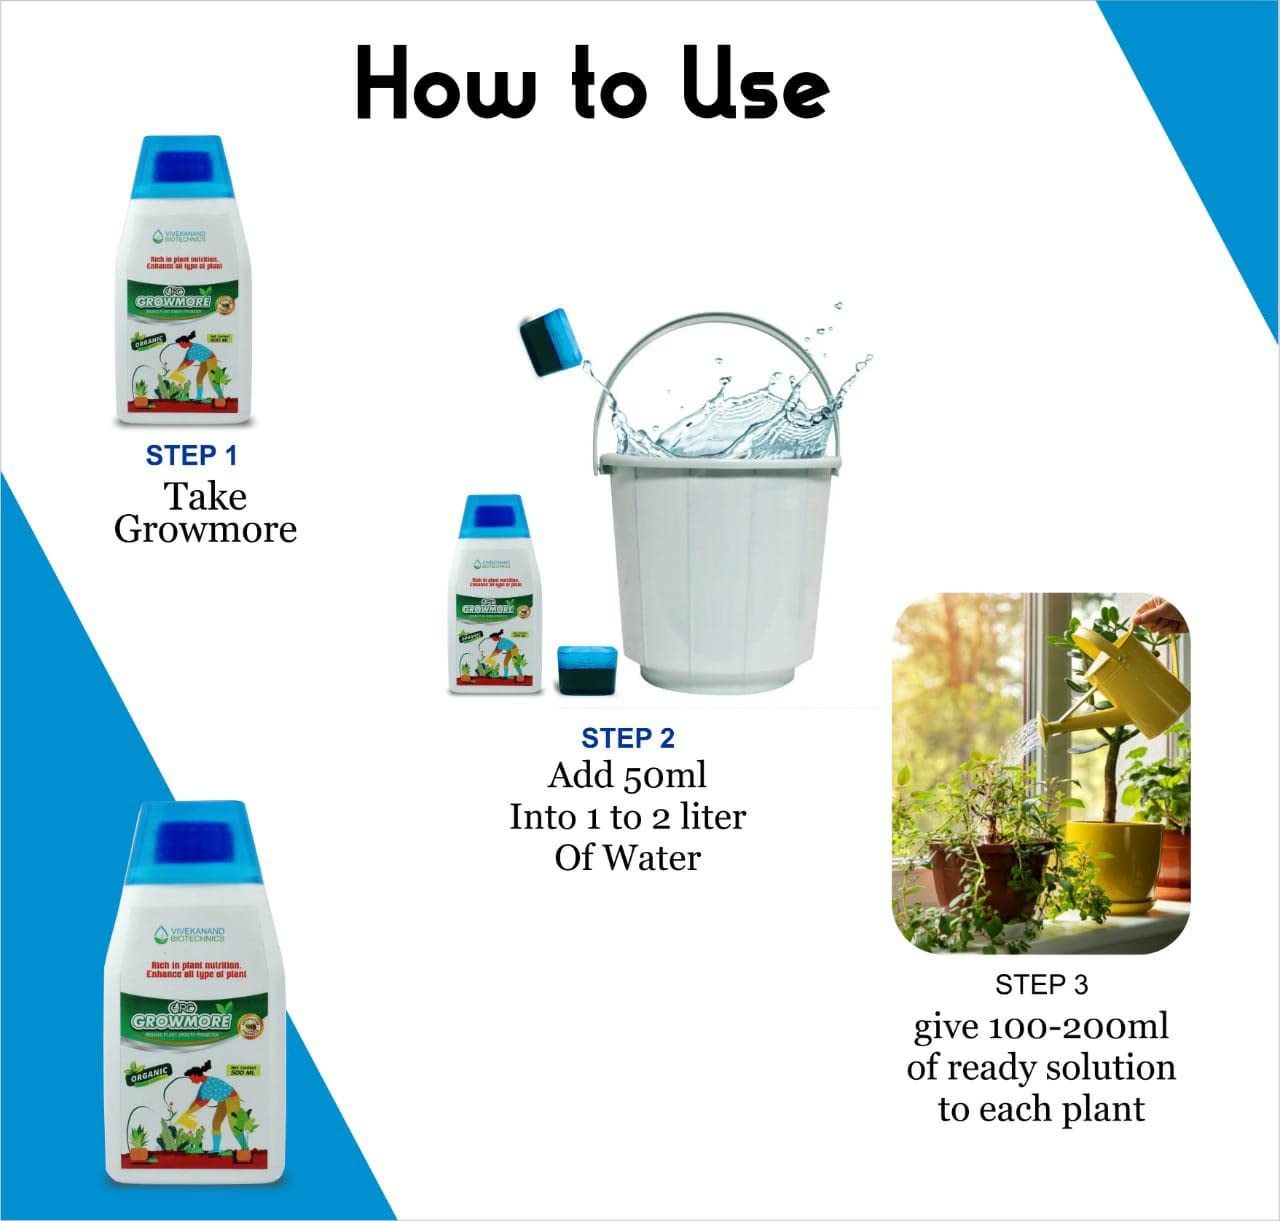 Growmore Liquid Fertilizer